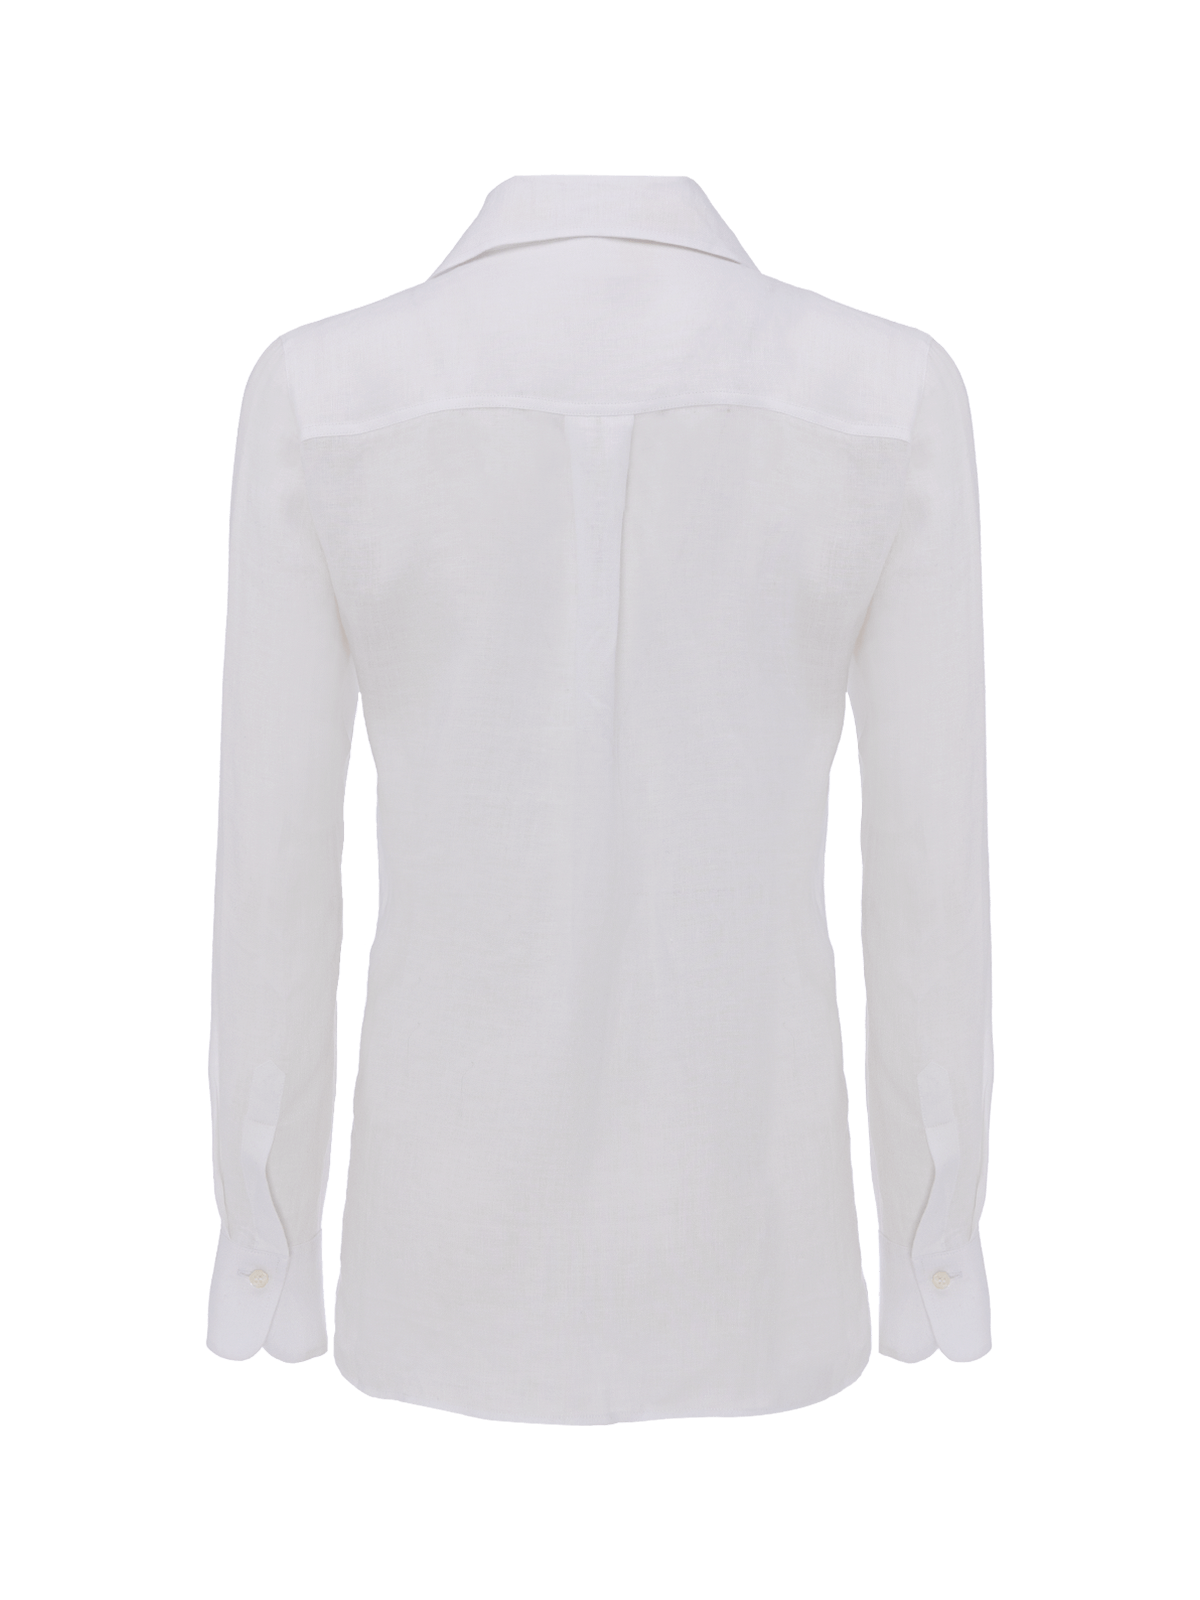 Classy linen shirt for woman 100% Capri white shirt  back